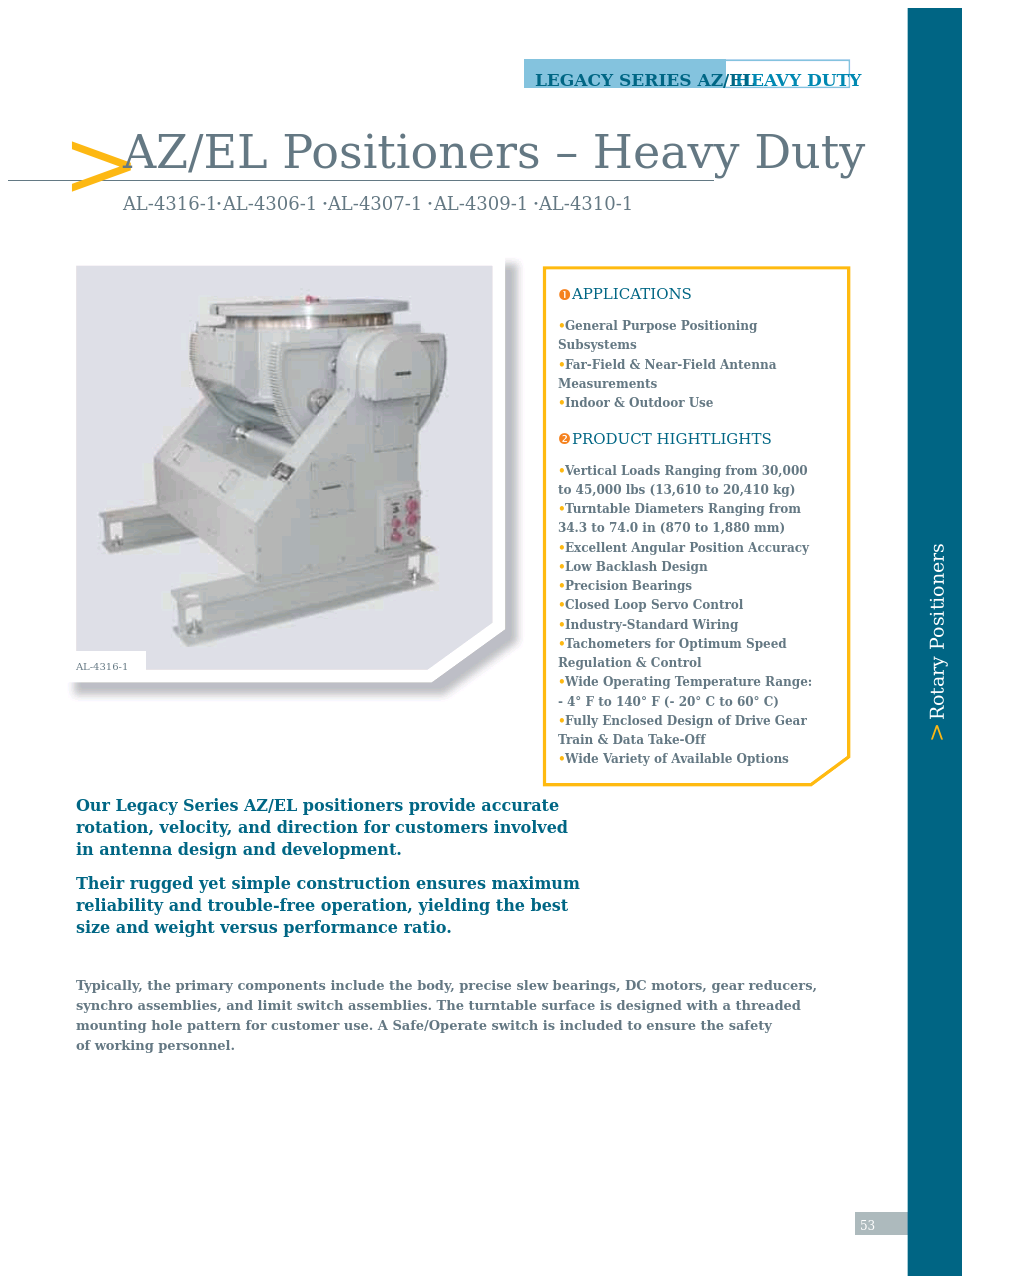 AZ, EL Positioners: Heavy Duty